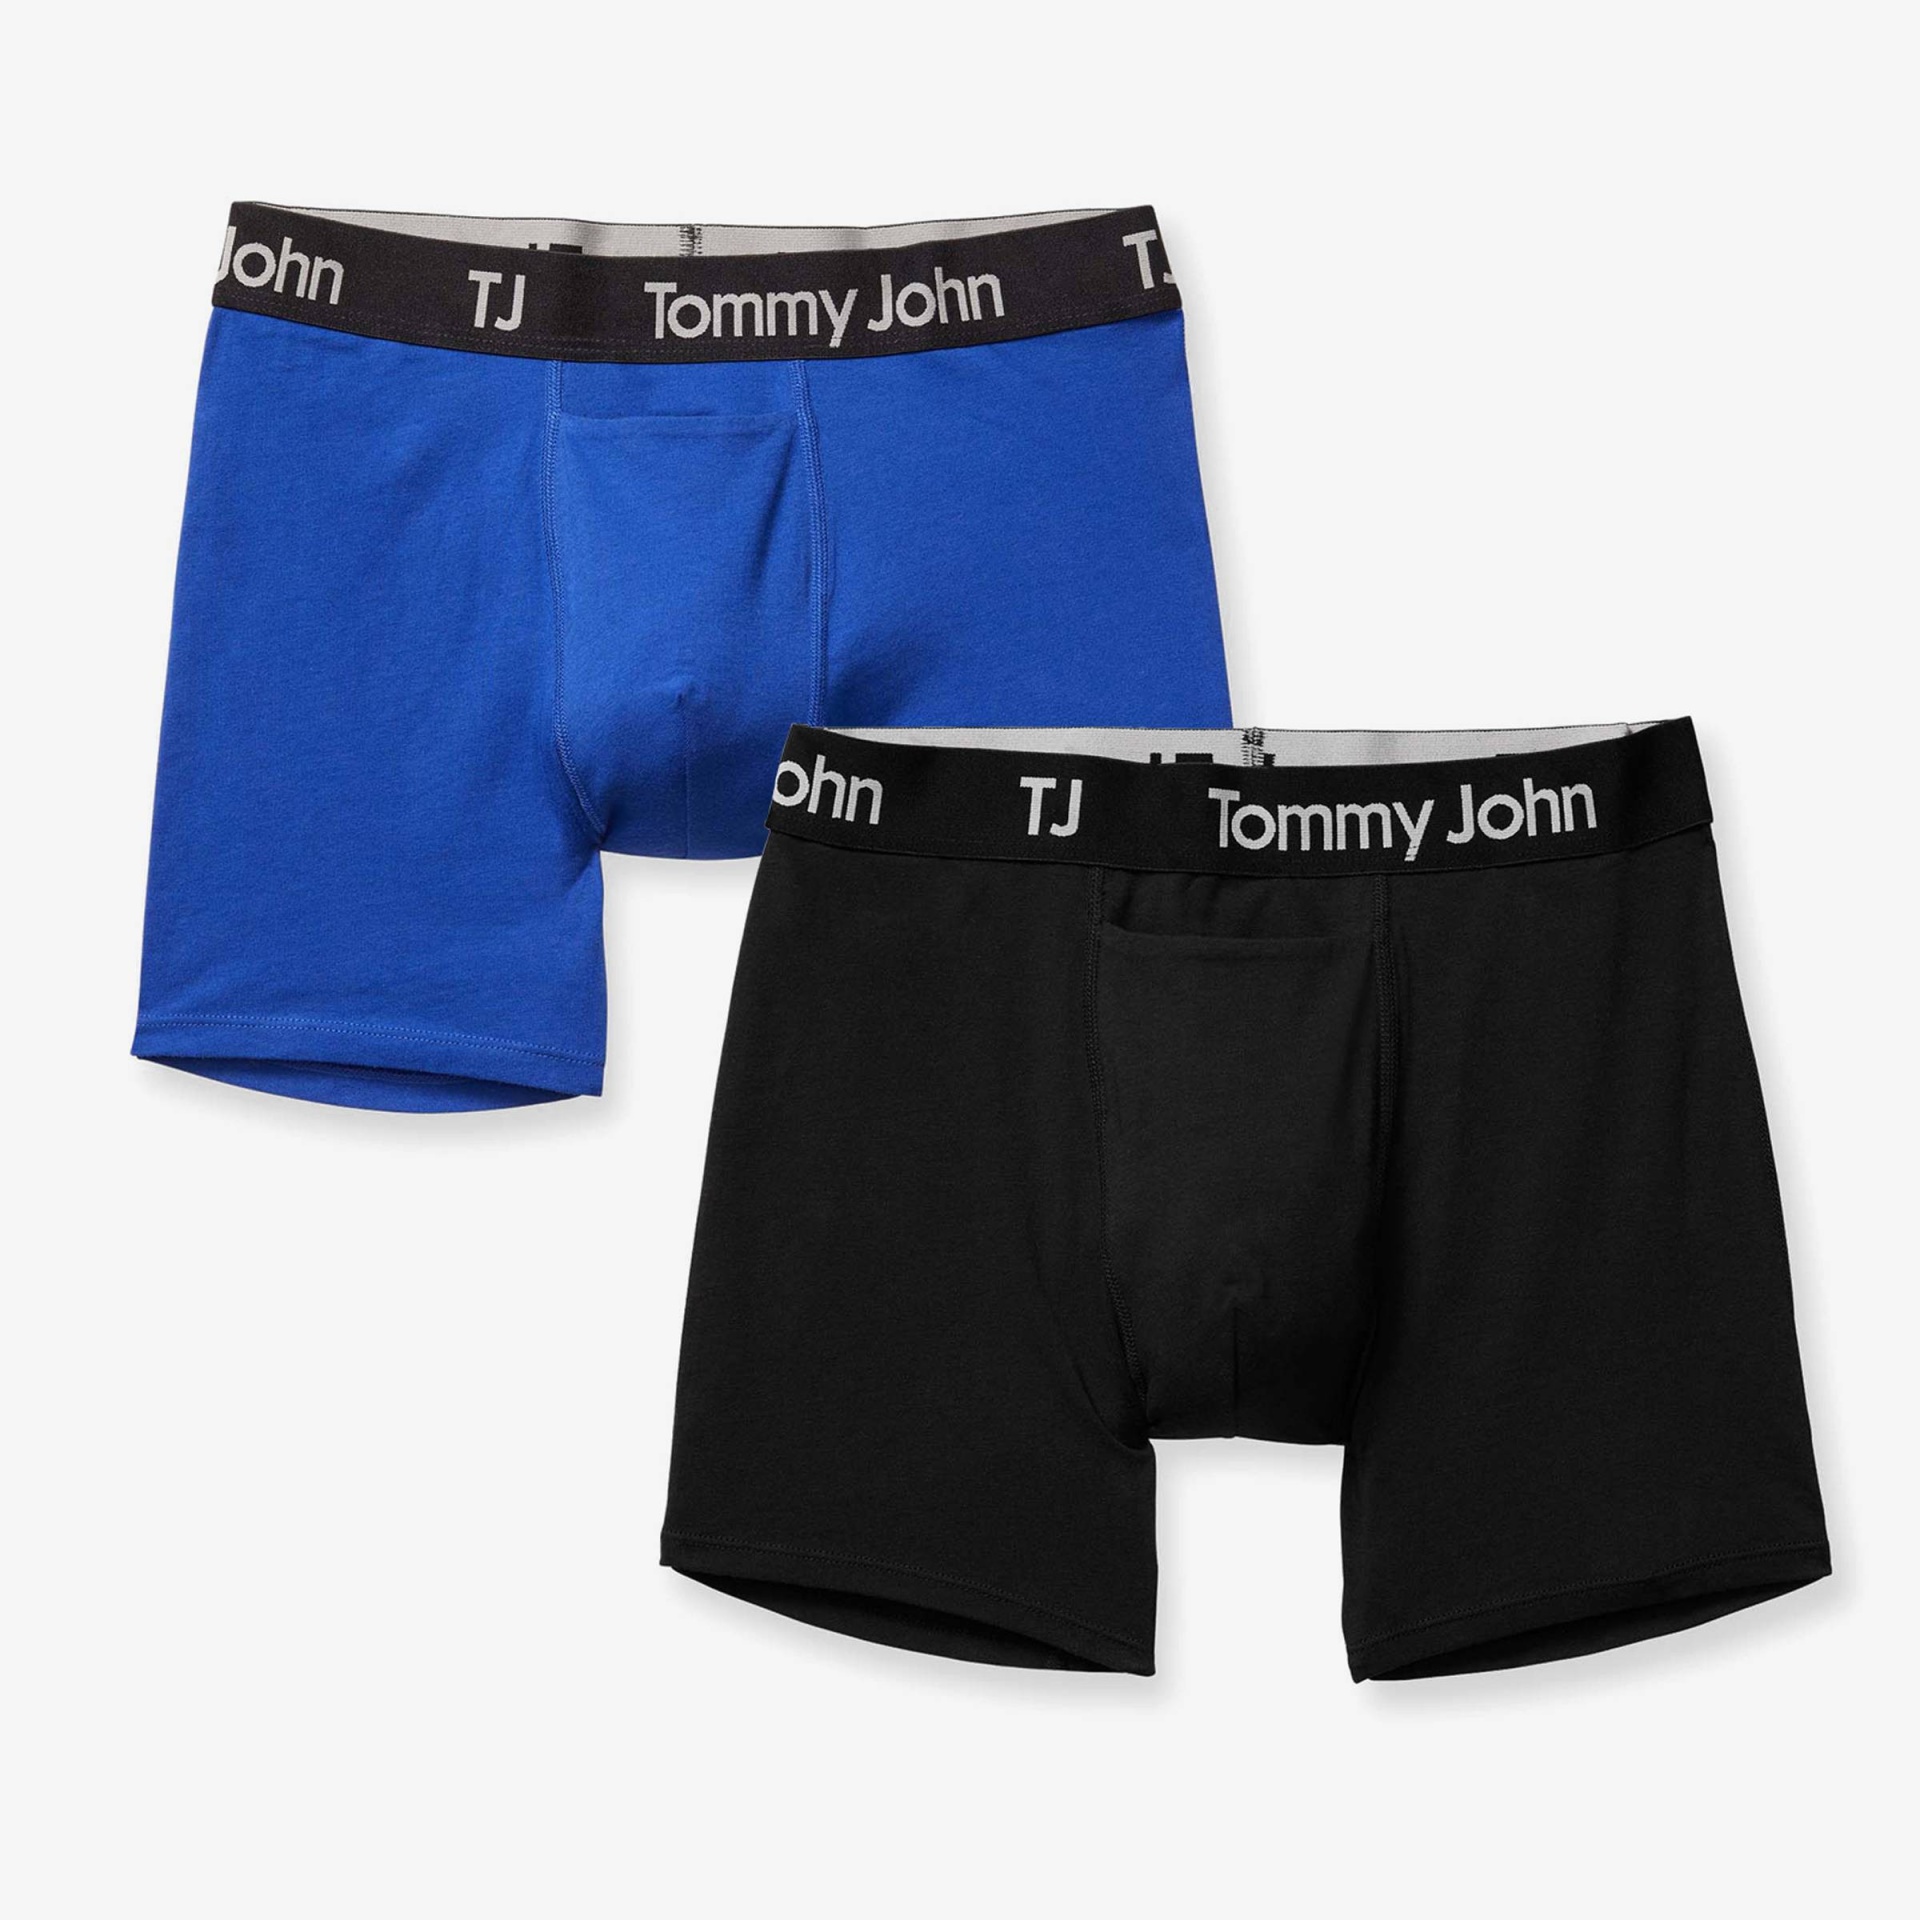 TJ, Tommy John Men's 4 Boxer Briefs 2pk - Mazarine Blue/Black XL 2 ct